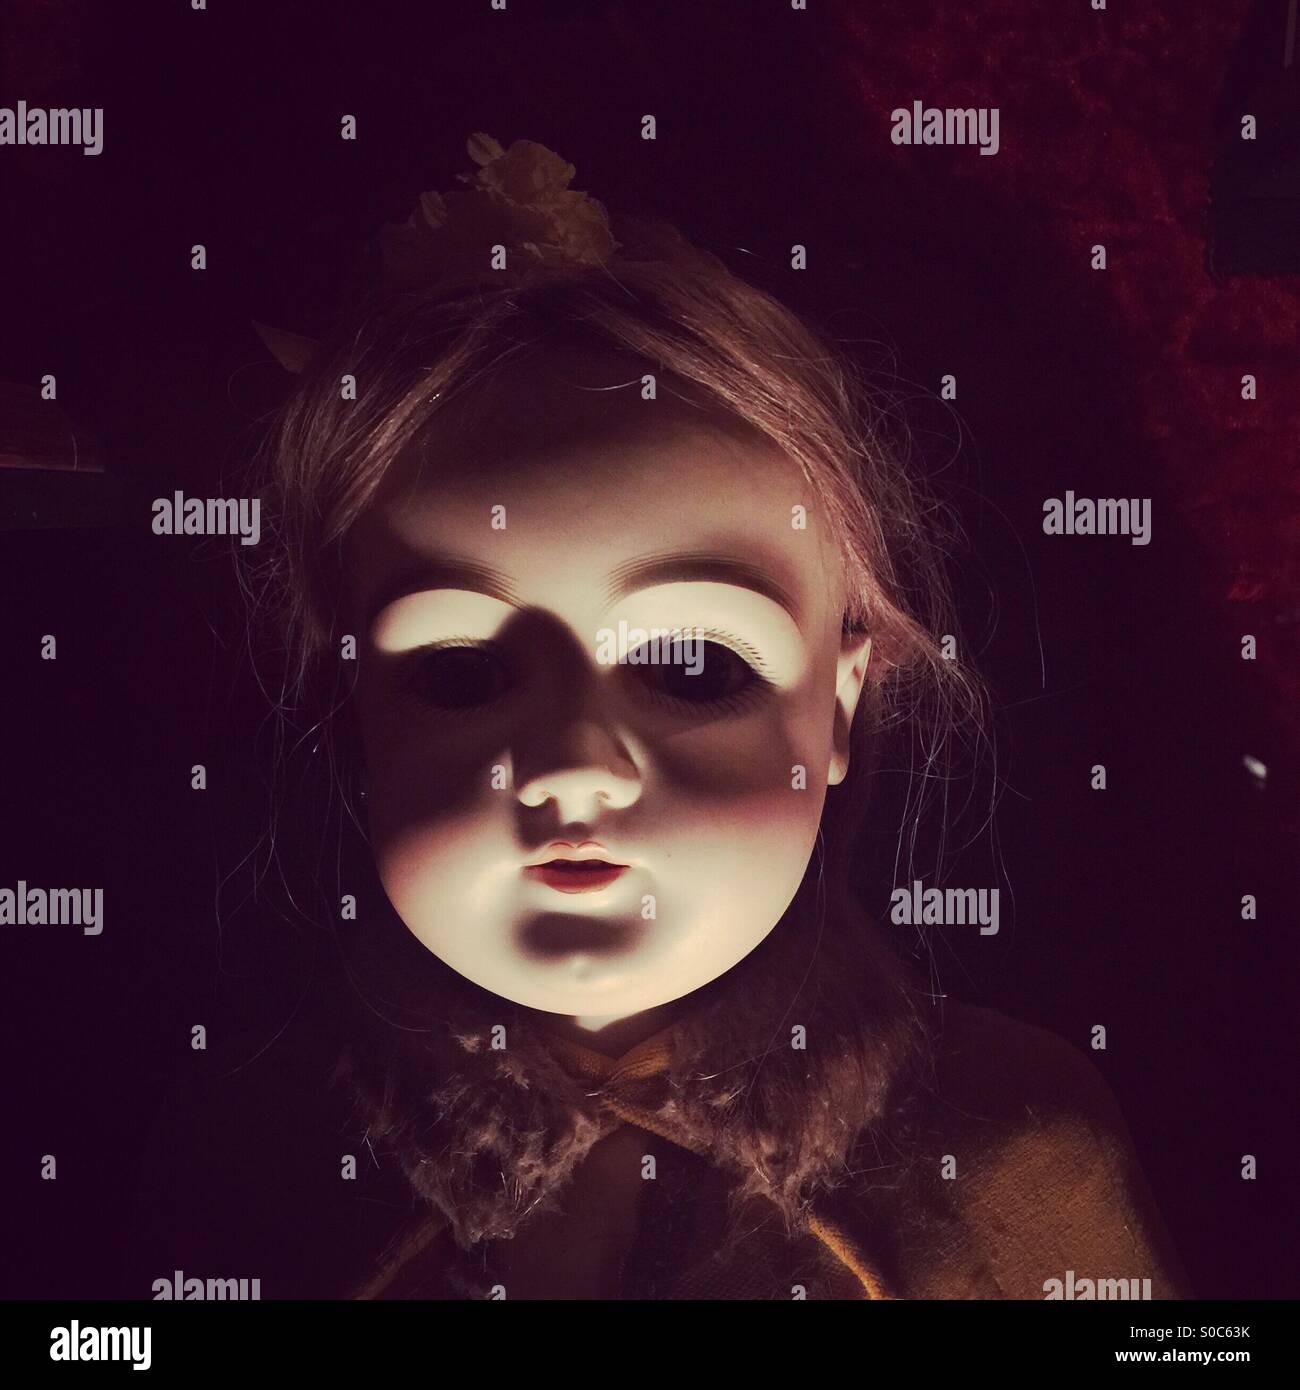 Muñeca de porcelana de miedo fotografías e imágenes de alta resolución -  Alamy